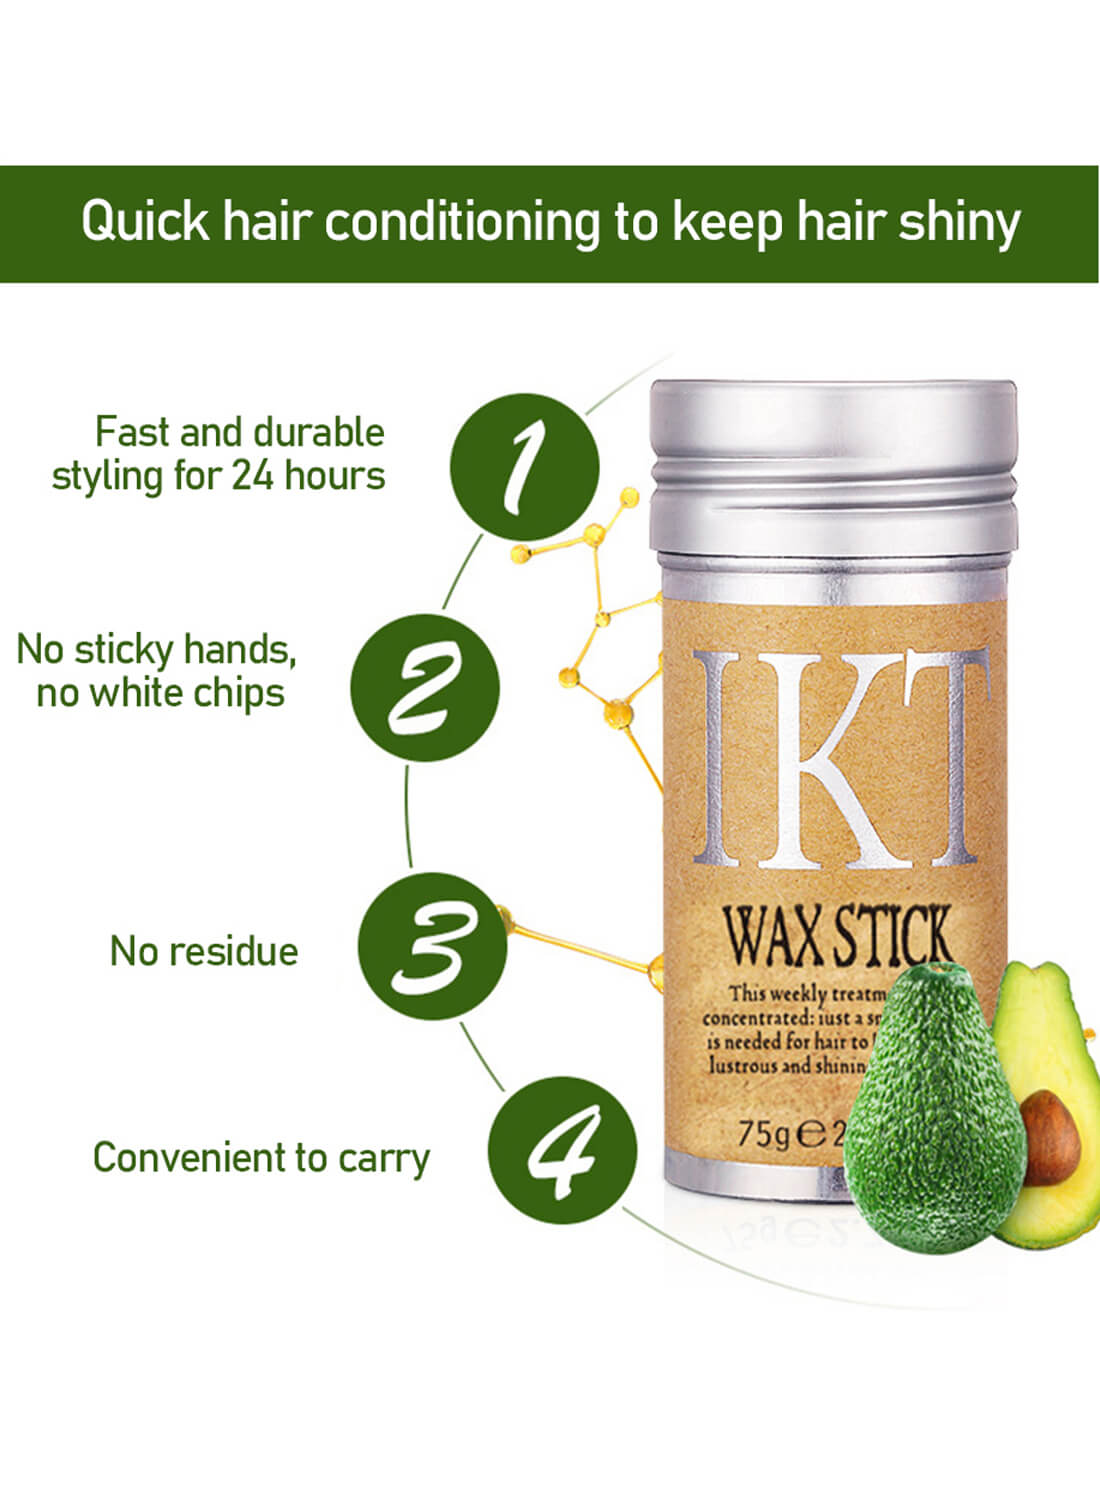 IKT Hair Wax Stick Non-greasy 75g